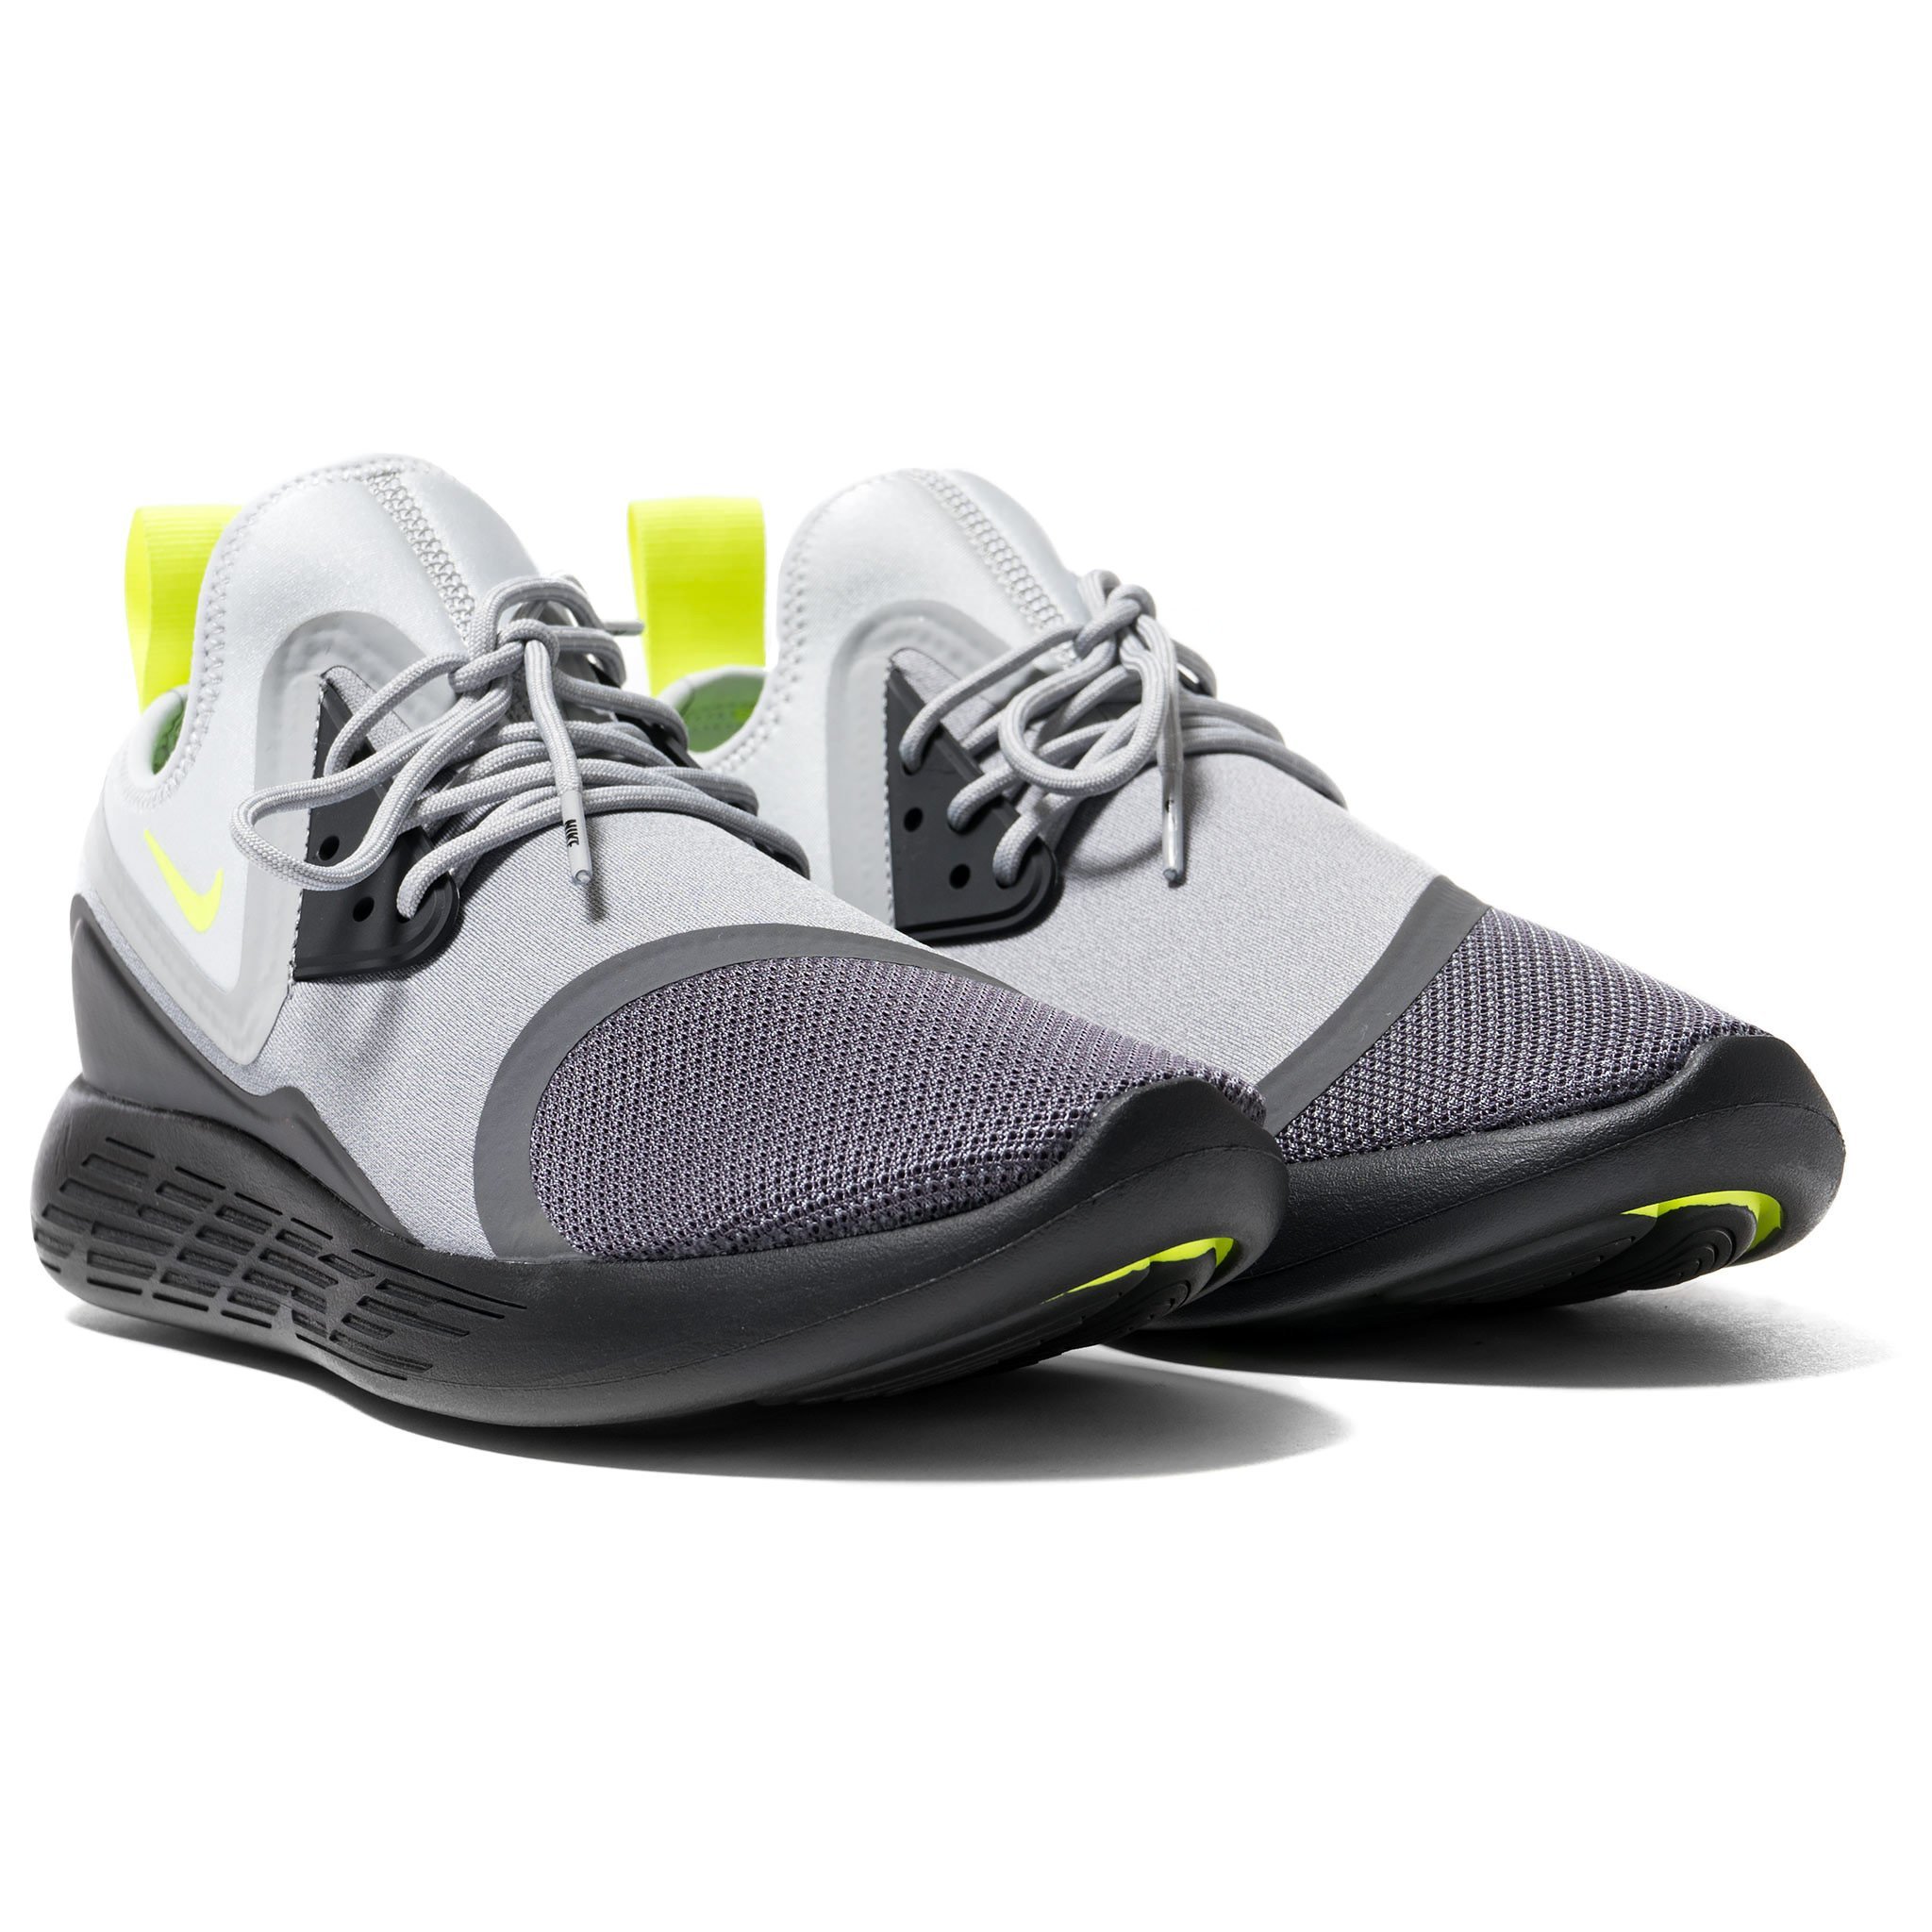 Nike LunarCharge Emerges "Neon" Colorway | Nice Kicks